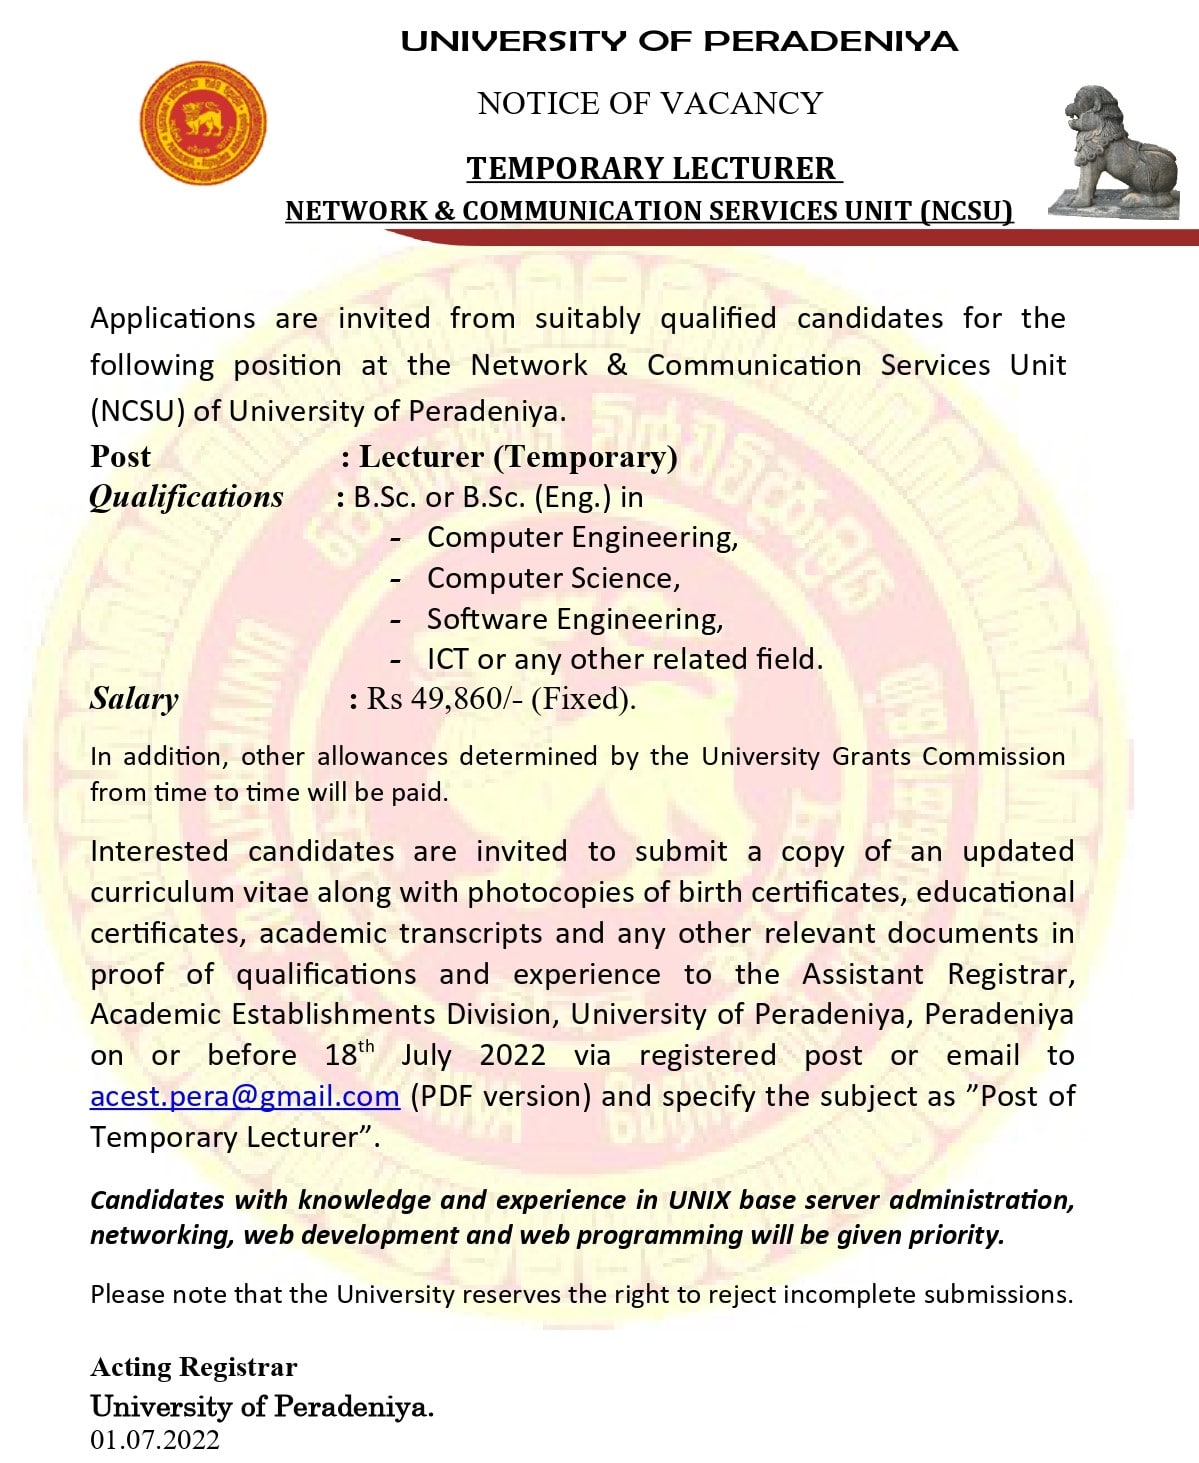 Temporary Lecturer (NCSU) Job Vacancy - University of Peradeniya Jobs Vcancies